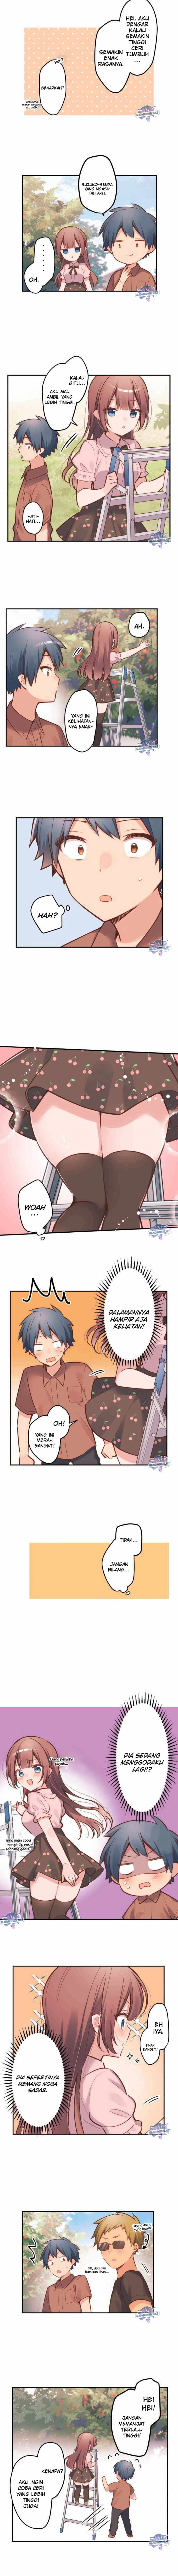 Waka-chan Is Flirty Again Chapter 07 5